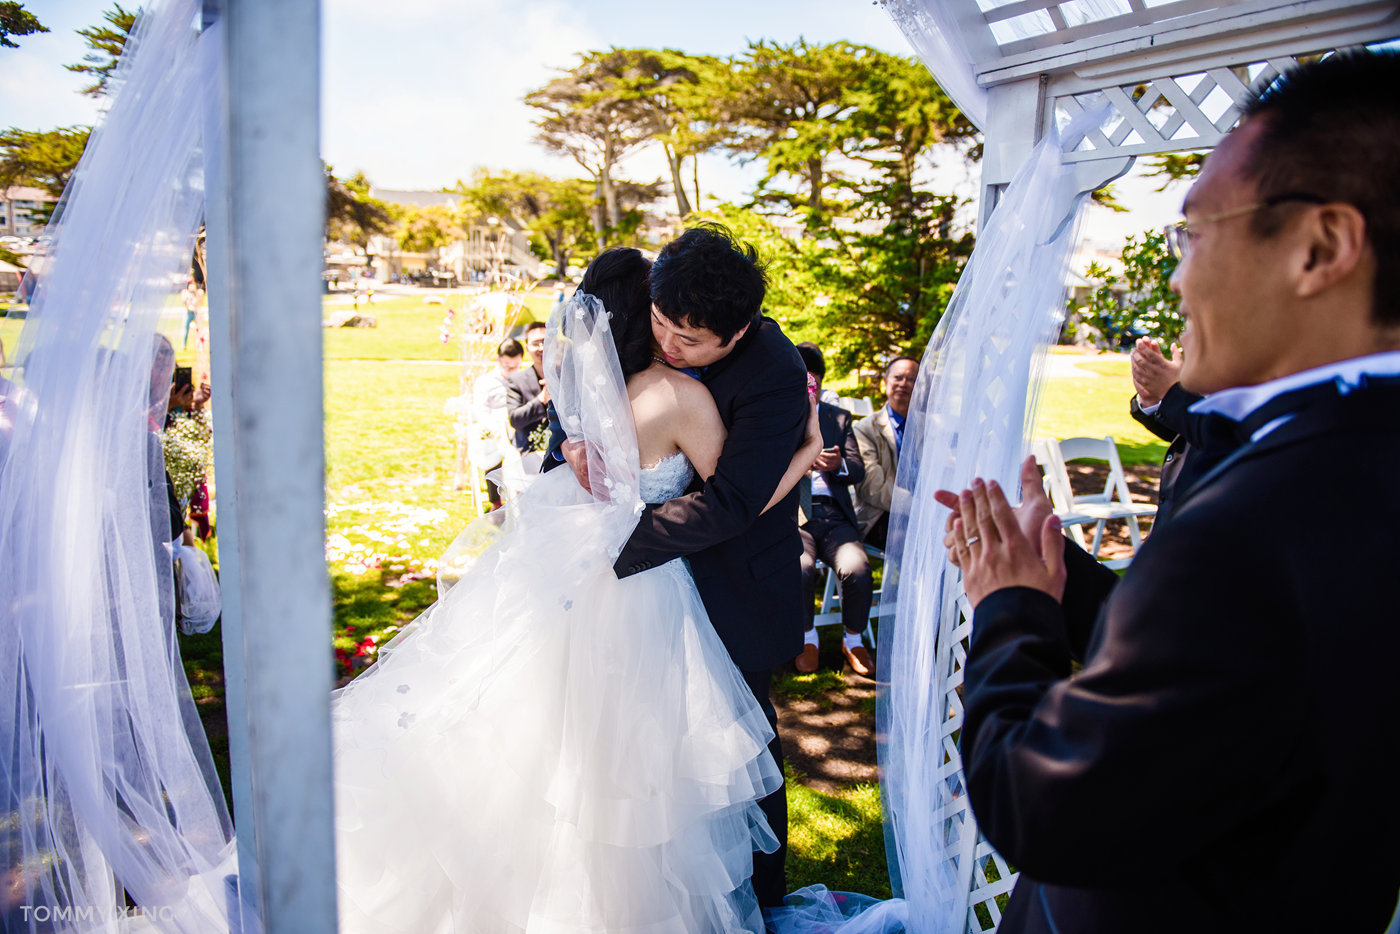 Lovers Point Park Wedding Monterey Wenping & Li  San Francisco Bay Area 旧金山湾区 洛杉矶婚礼婚纱照摄影师 Tommy Xing Photography 063.jpg